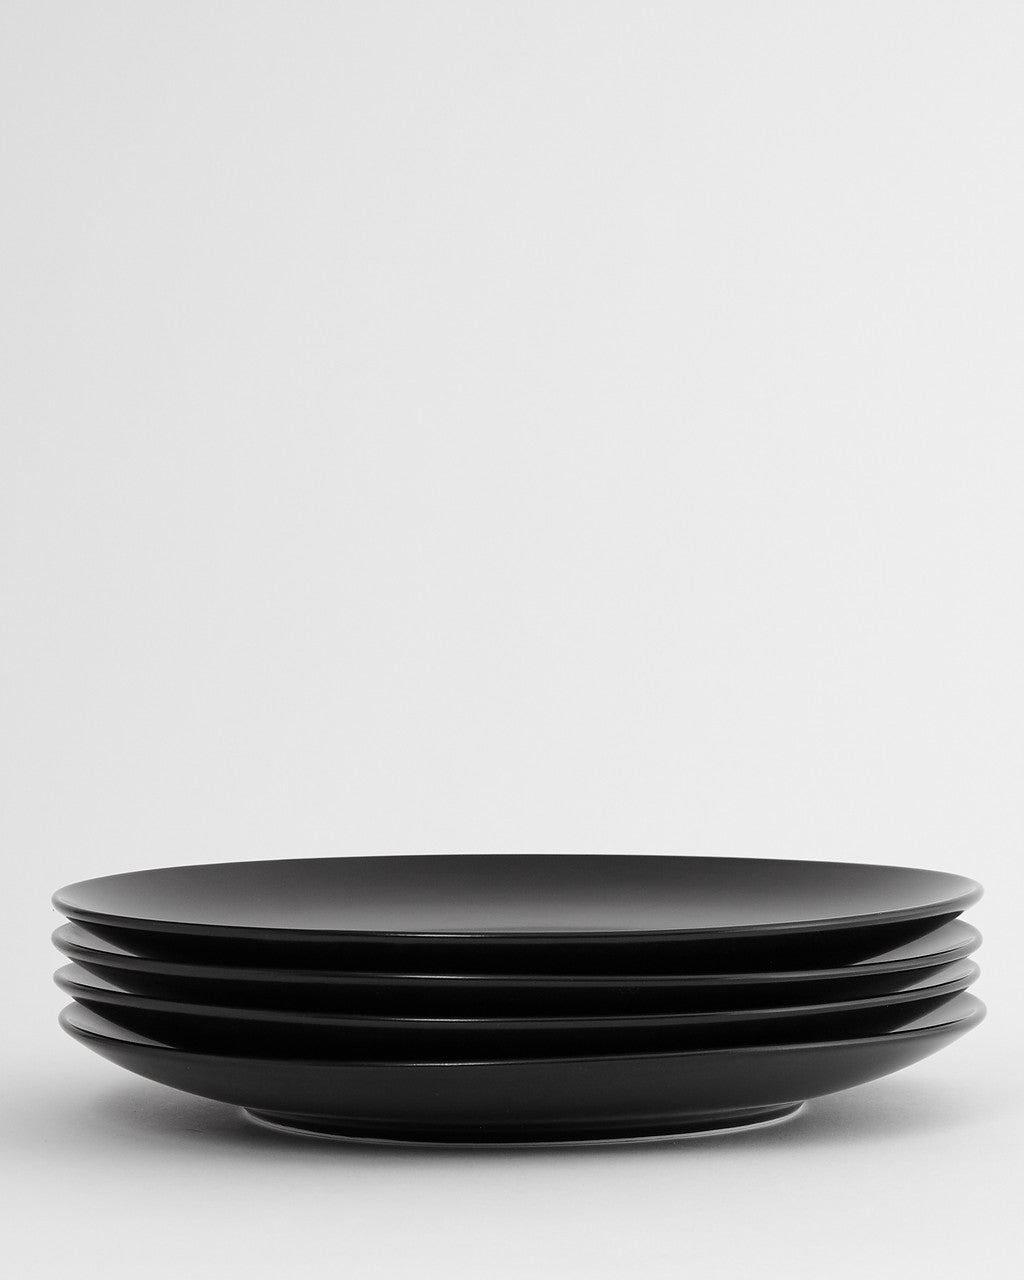 Euro Essential 4 Piece Dinner Plate Set, Semi-Matte Black